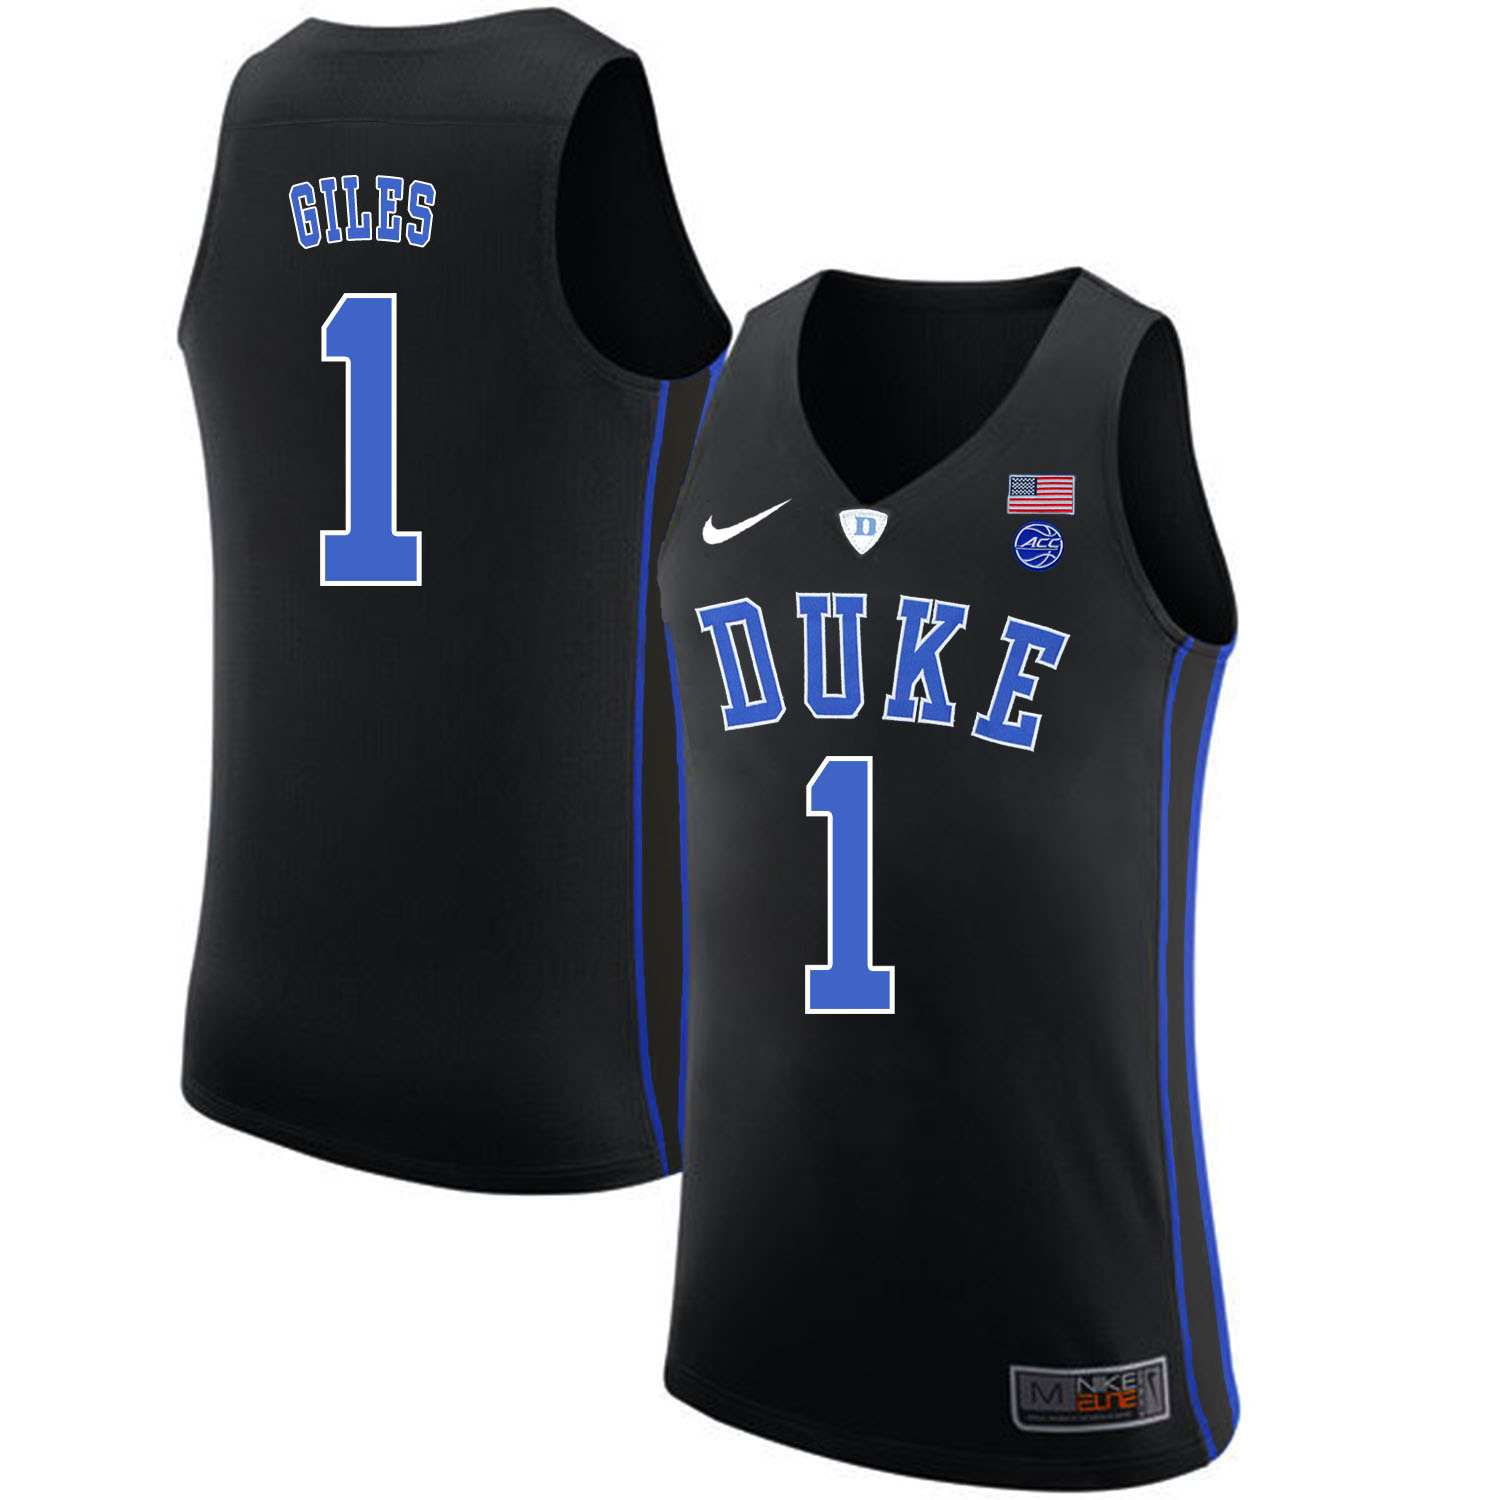 Duke Blue Devils 1 Harry Giles Black Nike College Basketball Jersey